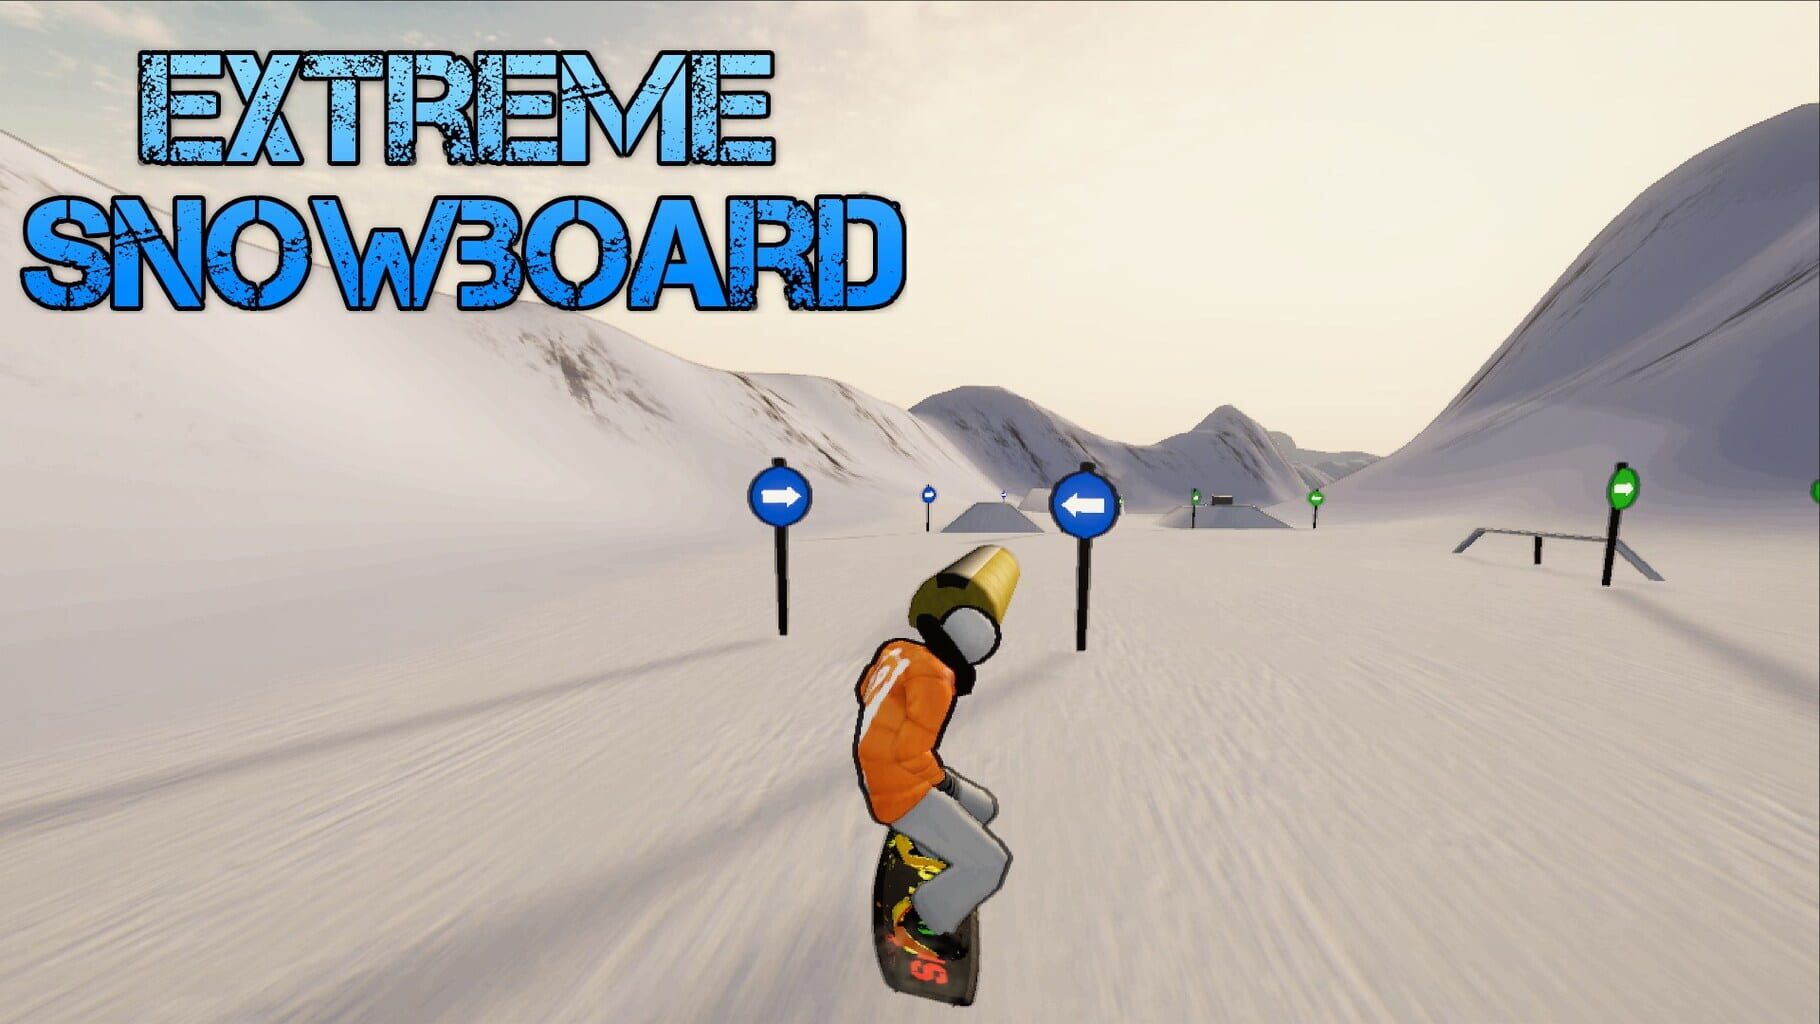 Extreme Snowboard artwork